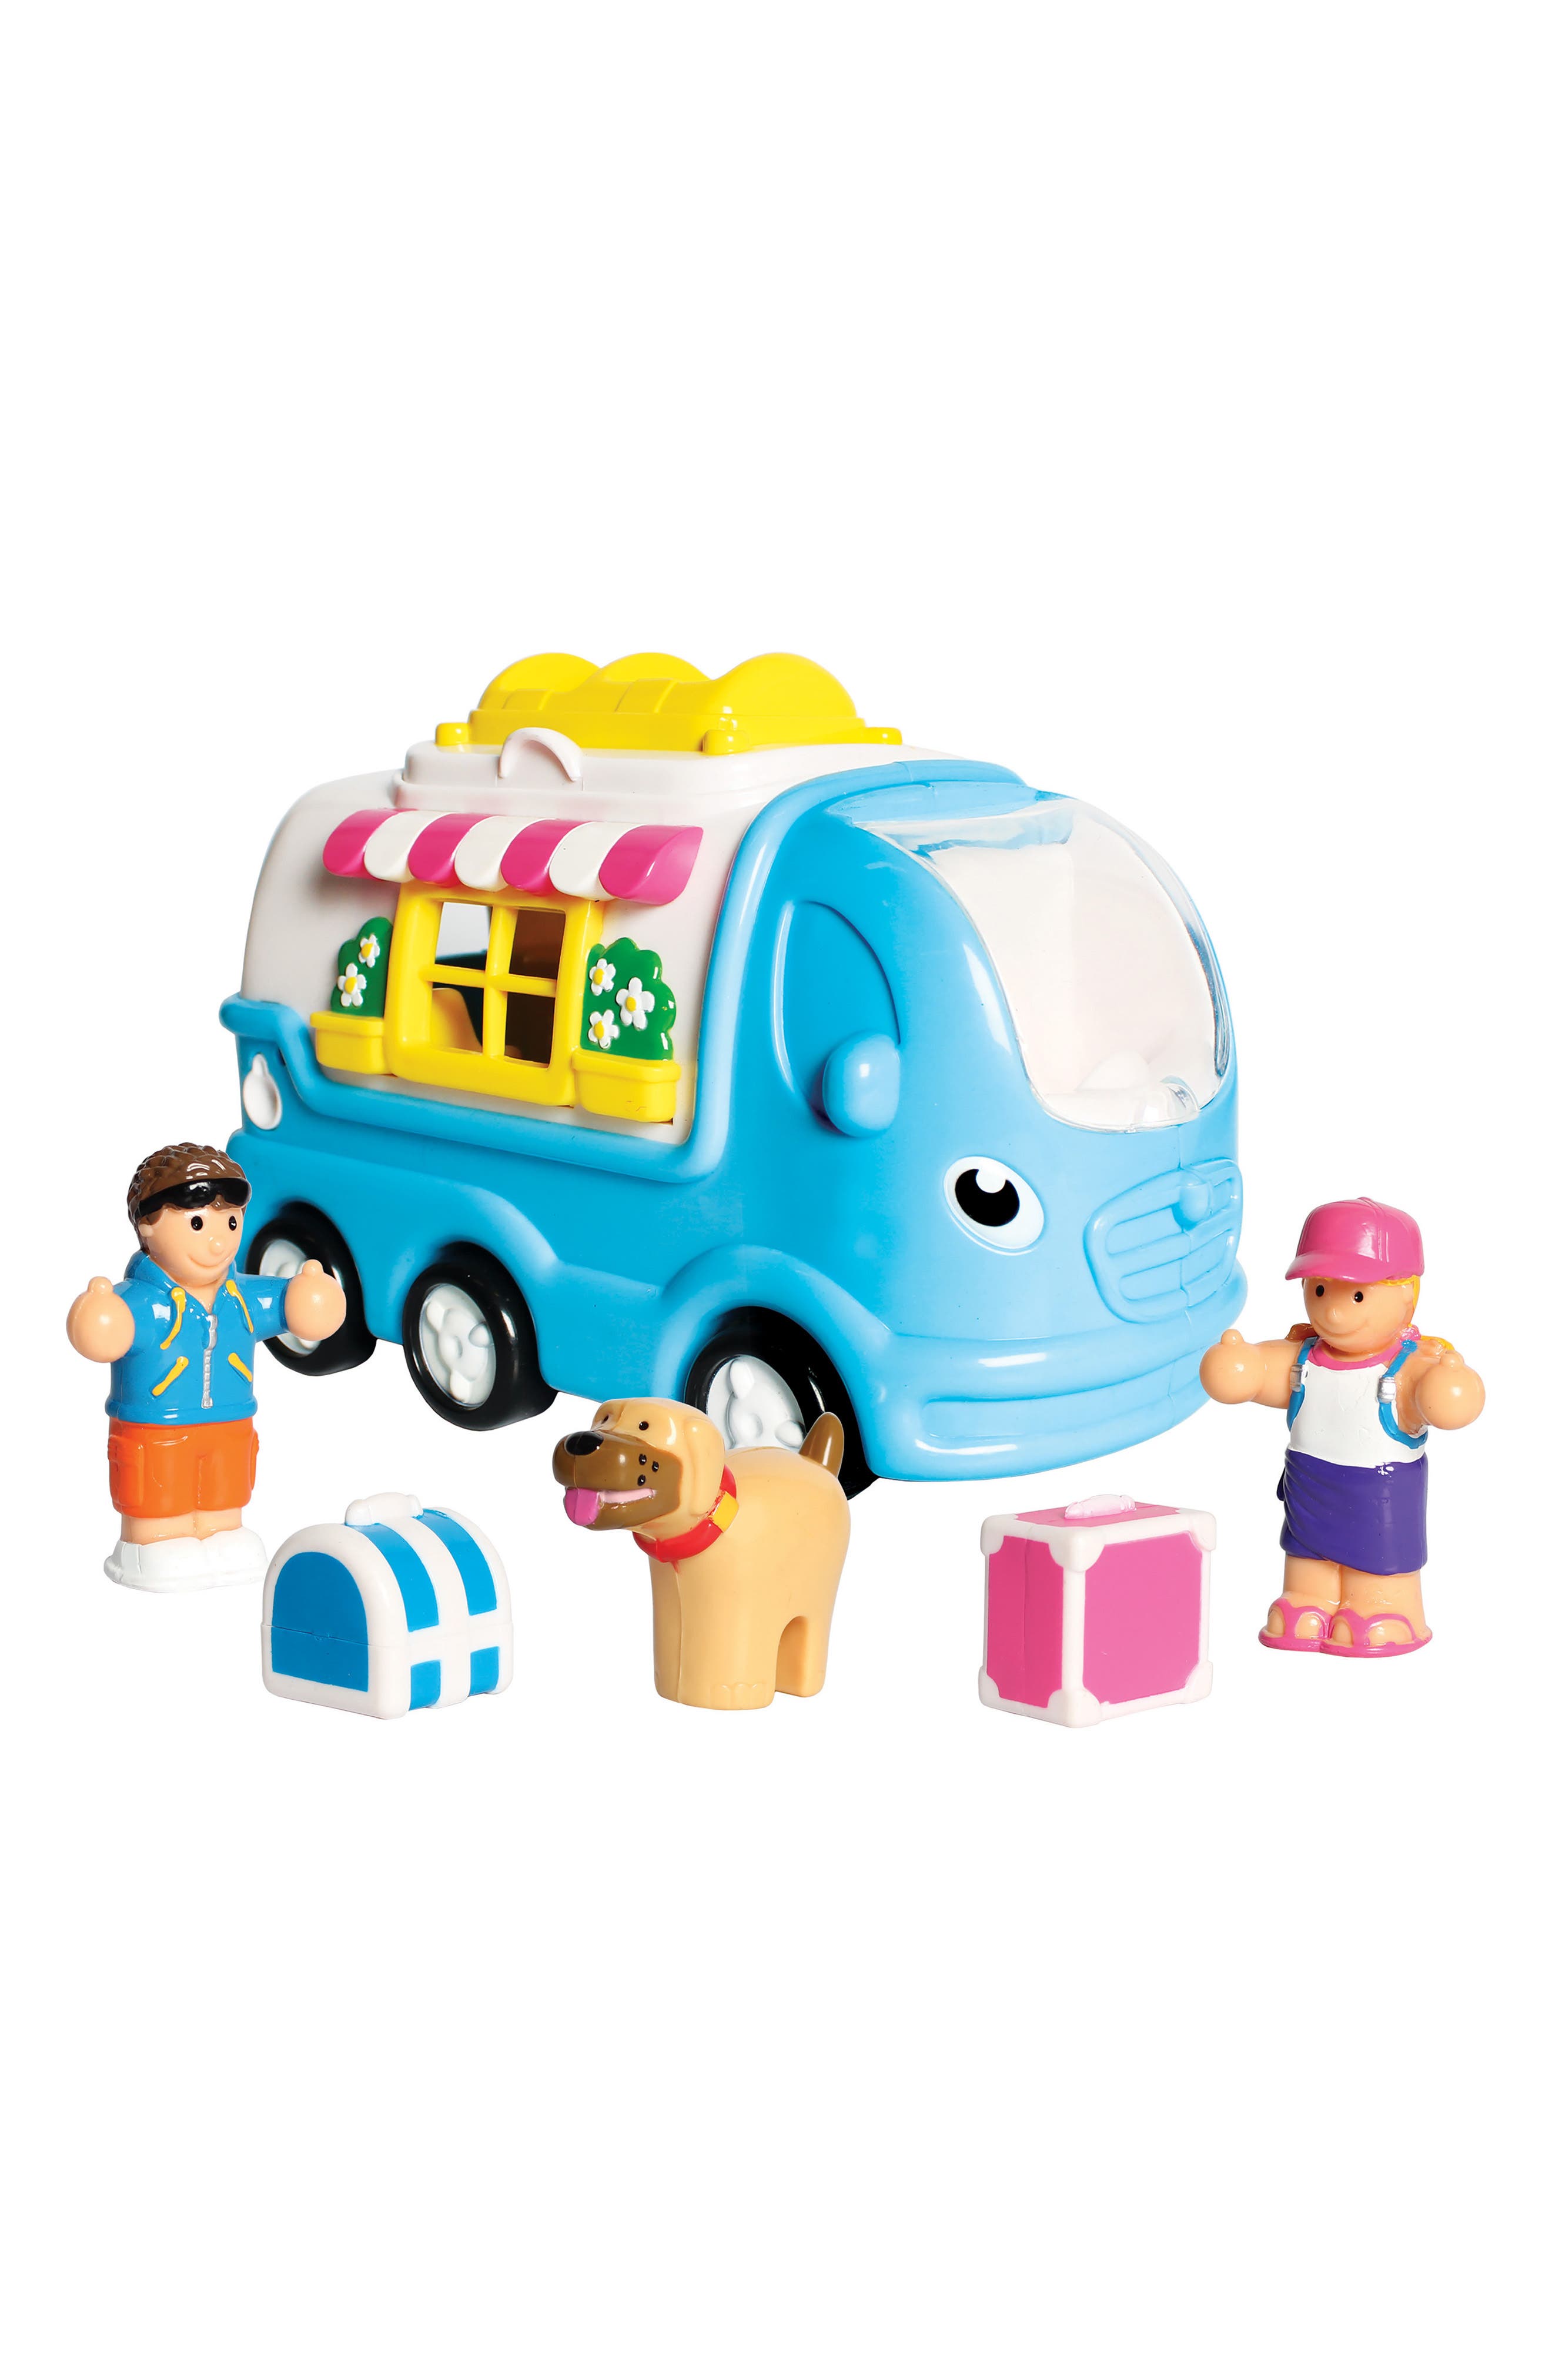 camper van toy car